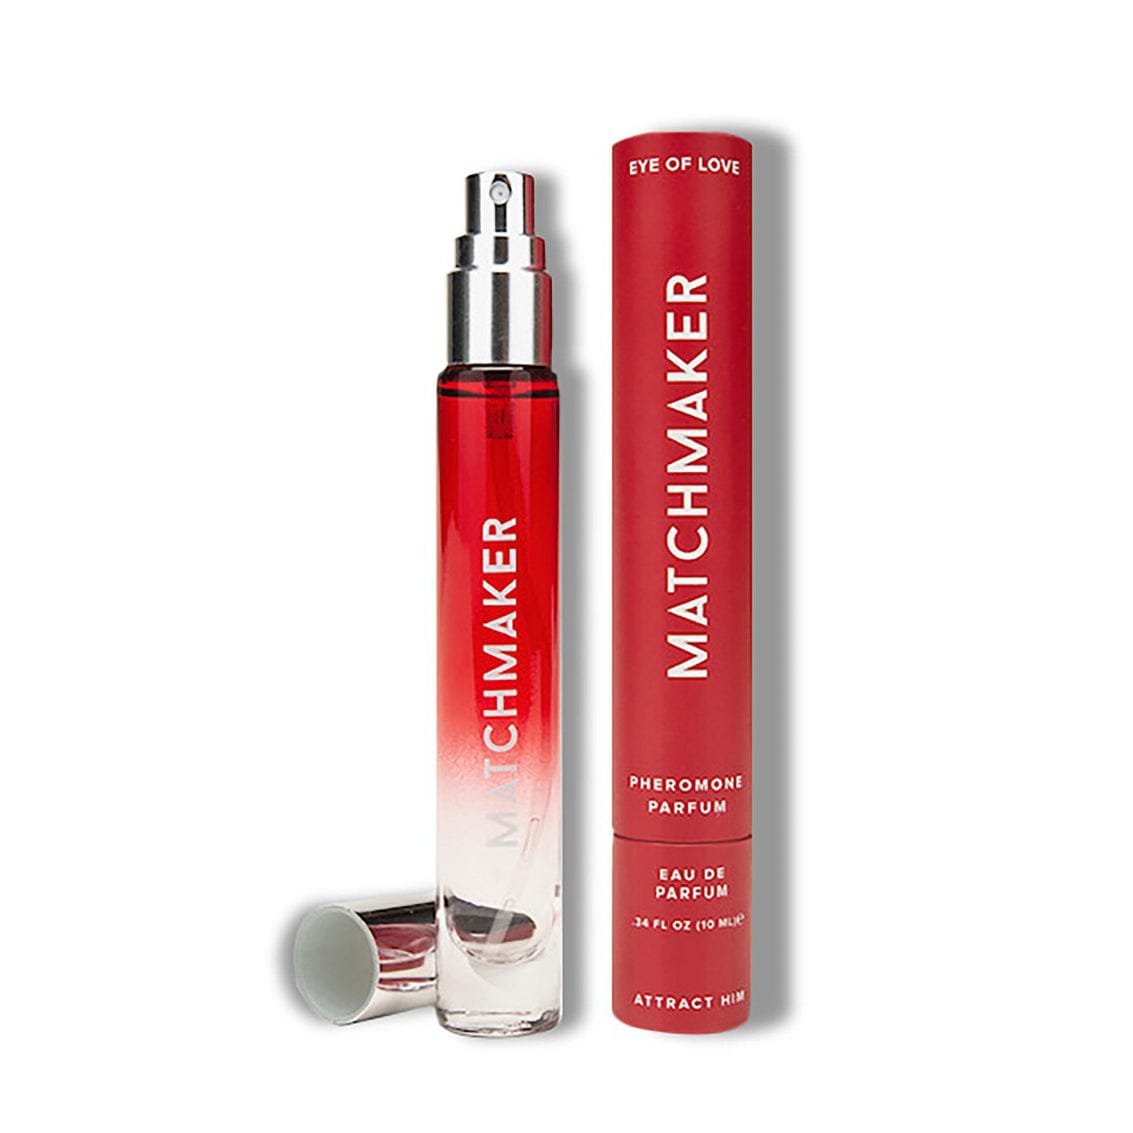 Eye of Love - Matchmaker Red Diamond Pheromone Parfum Spray Travel Size For Her 10ml -  Pheromones  Durio.sg